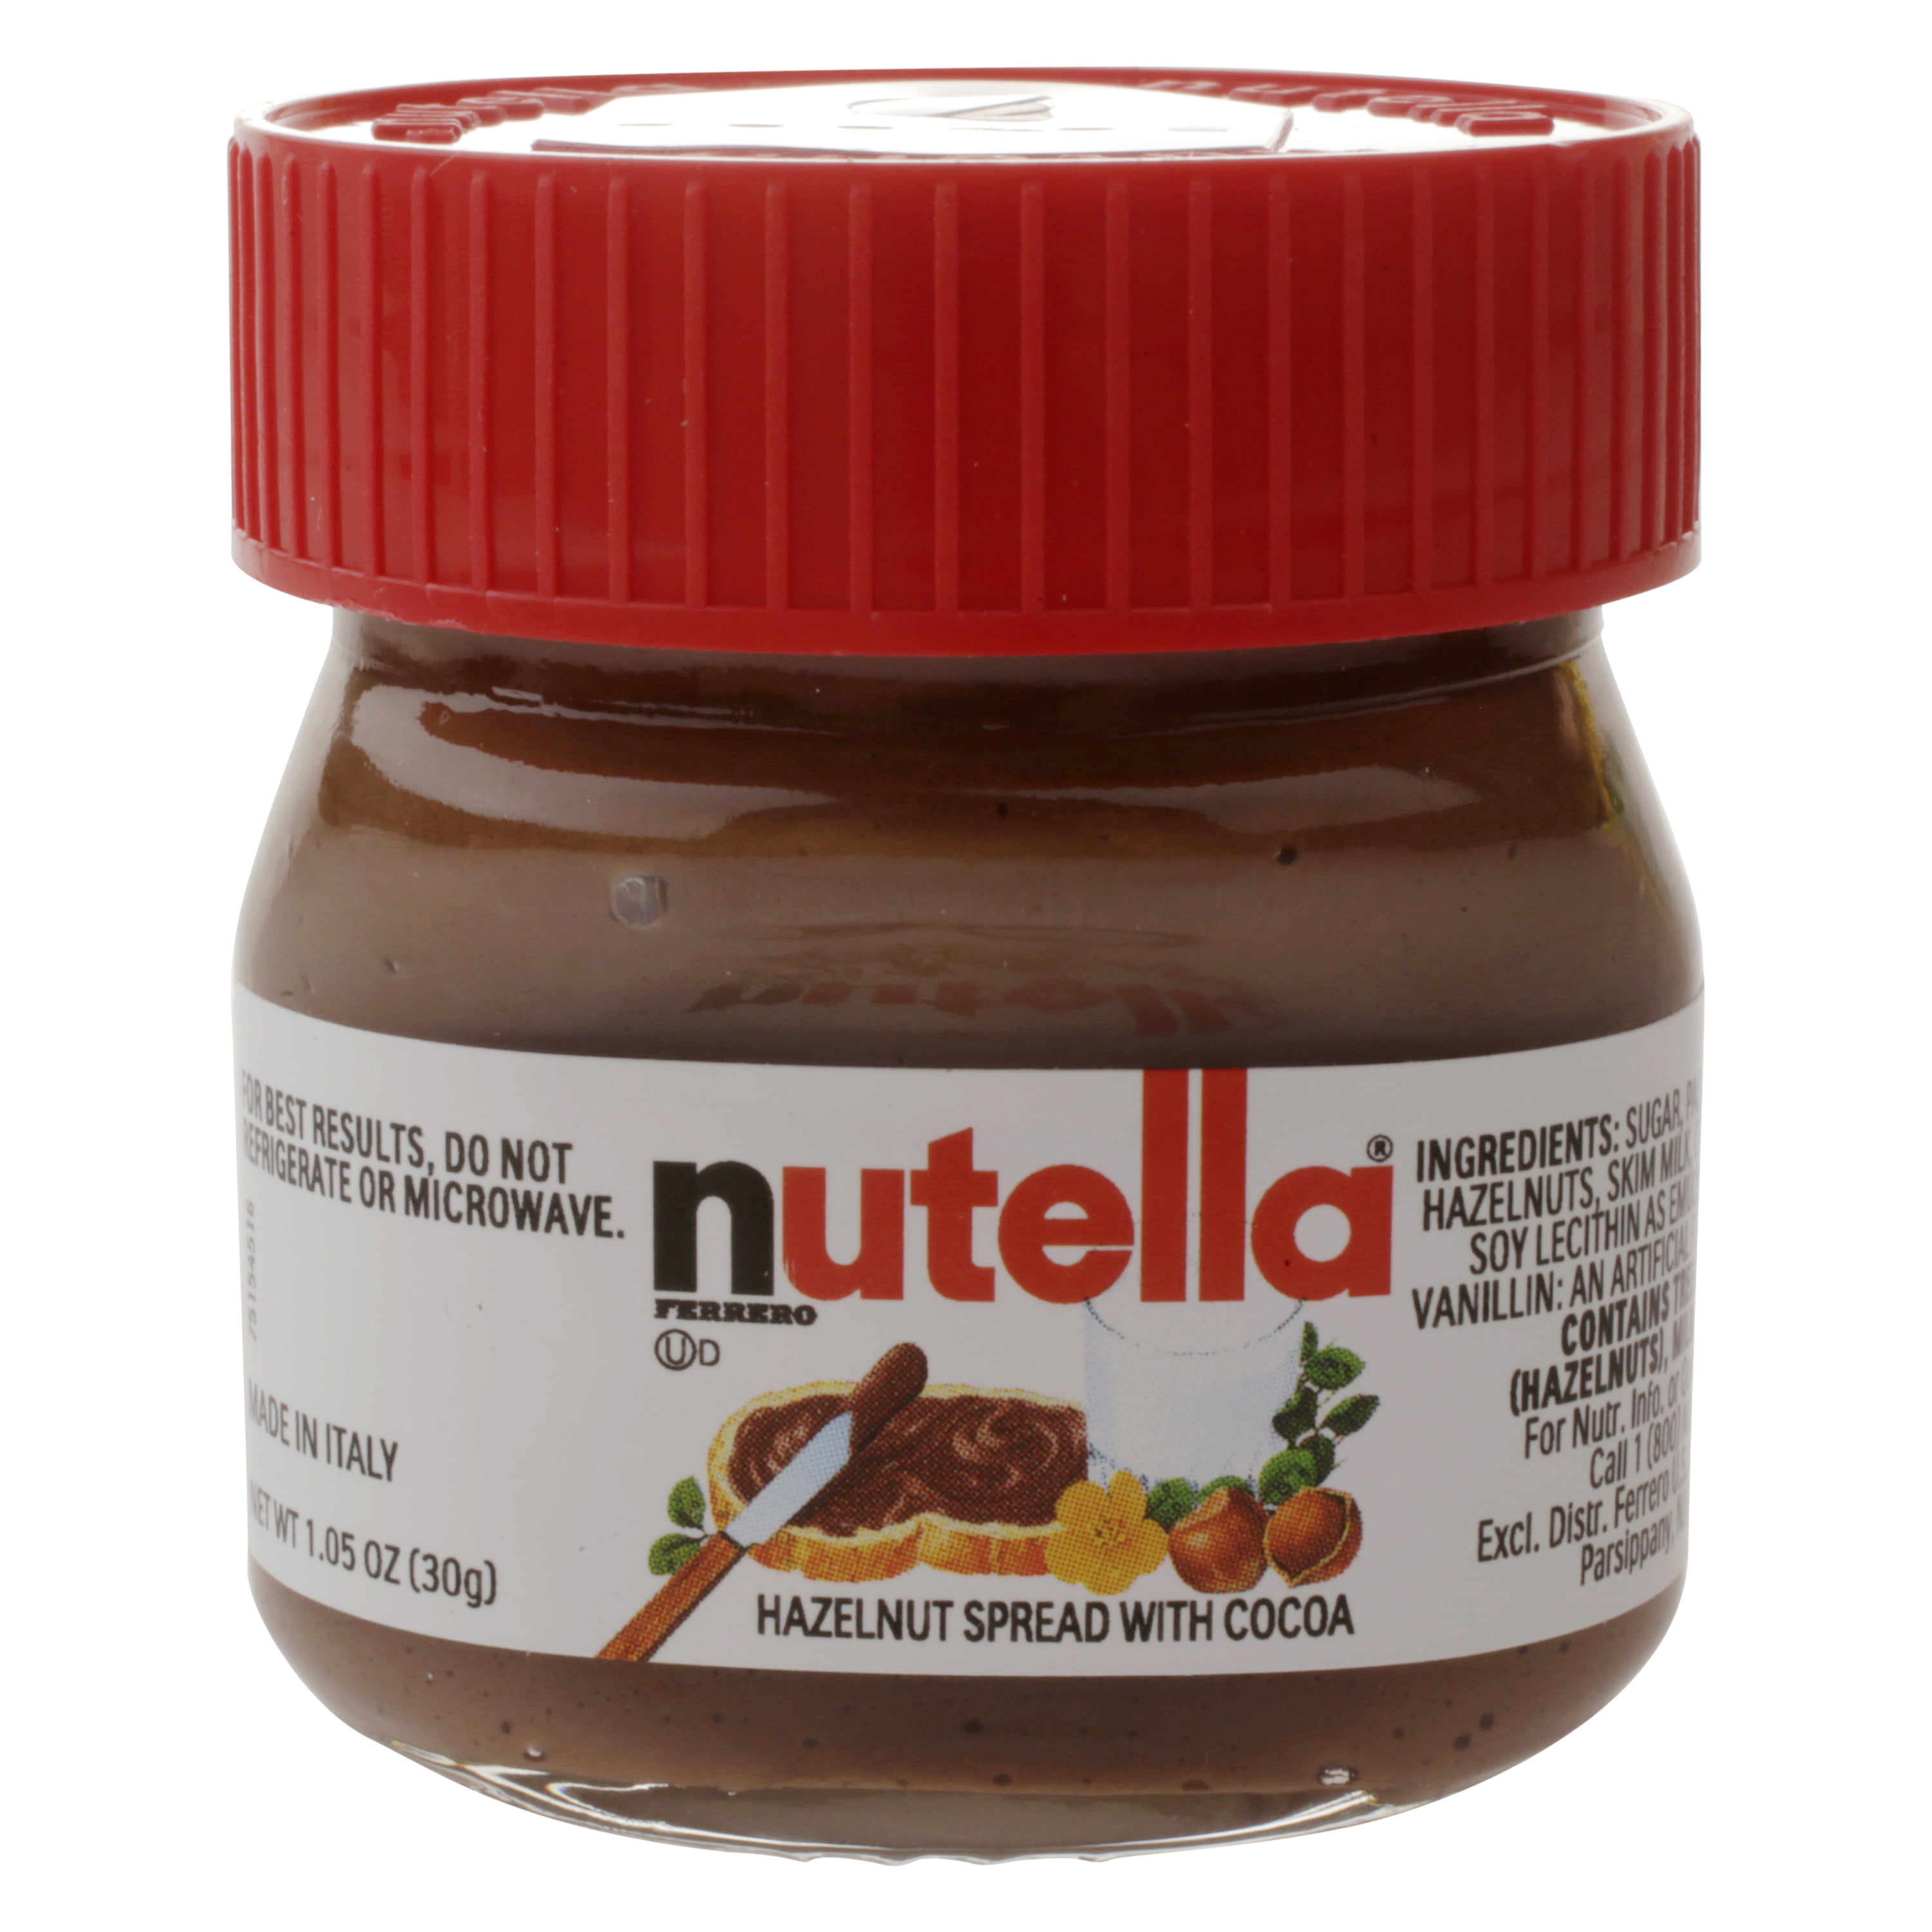 Nutella Hazelnut Spread with Cocoa, 1.04 Oz. - Walmart.com - Walmart.com